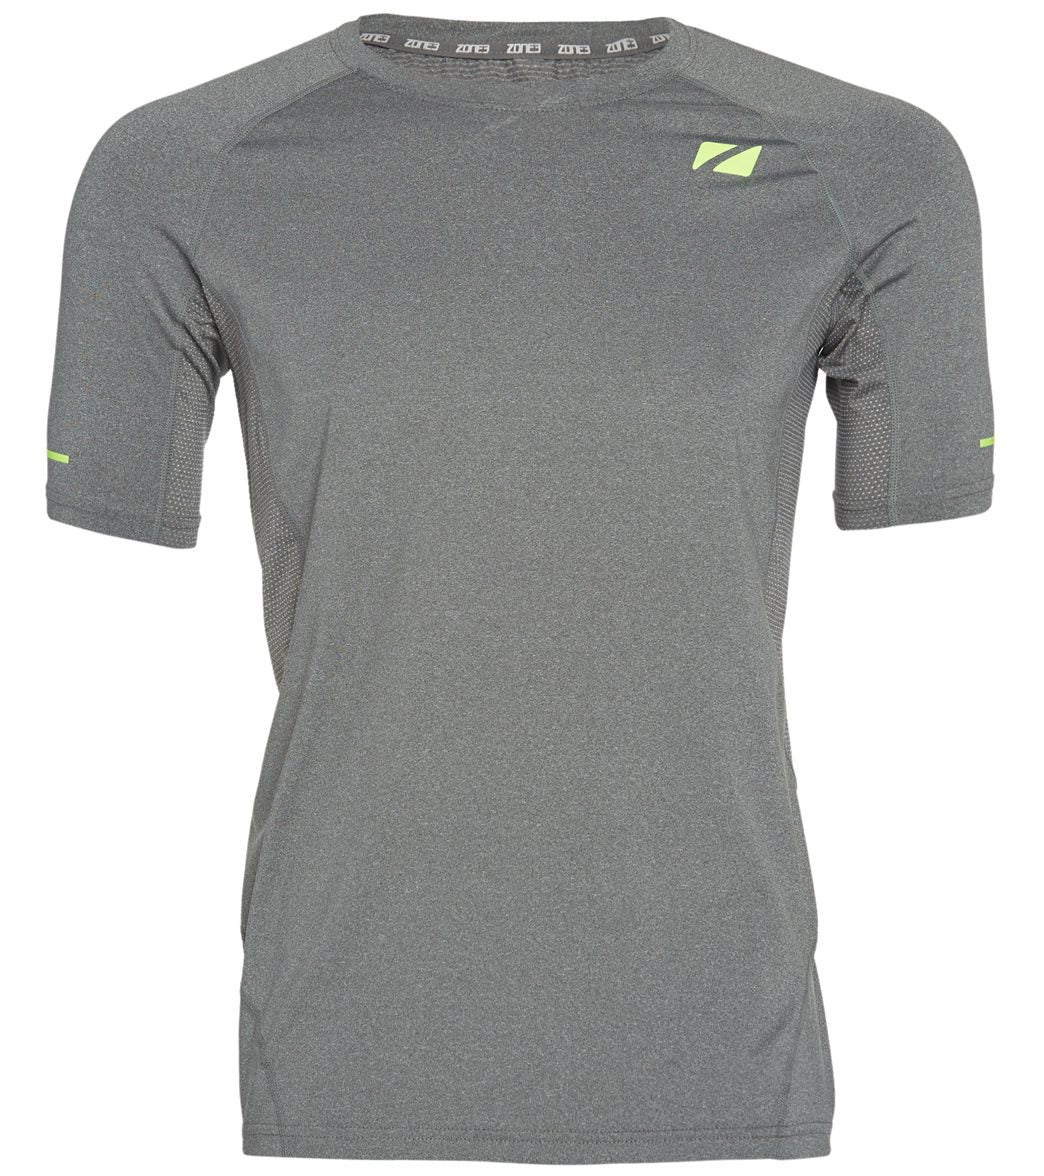 Zone3 Men's Compression Power Burst Short Sleeve Shirt - Grey Spec/Neon Yellow Large - Swimoutlet.com